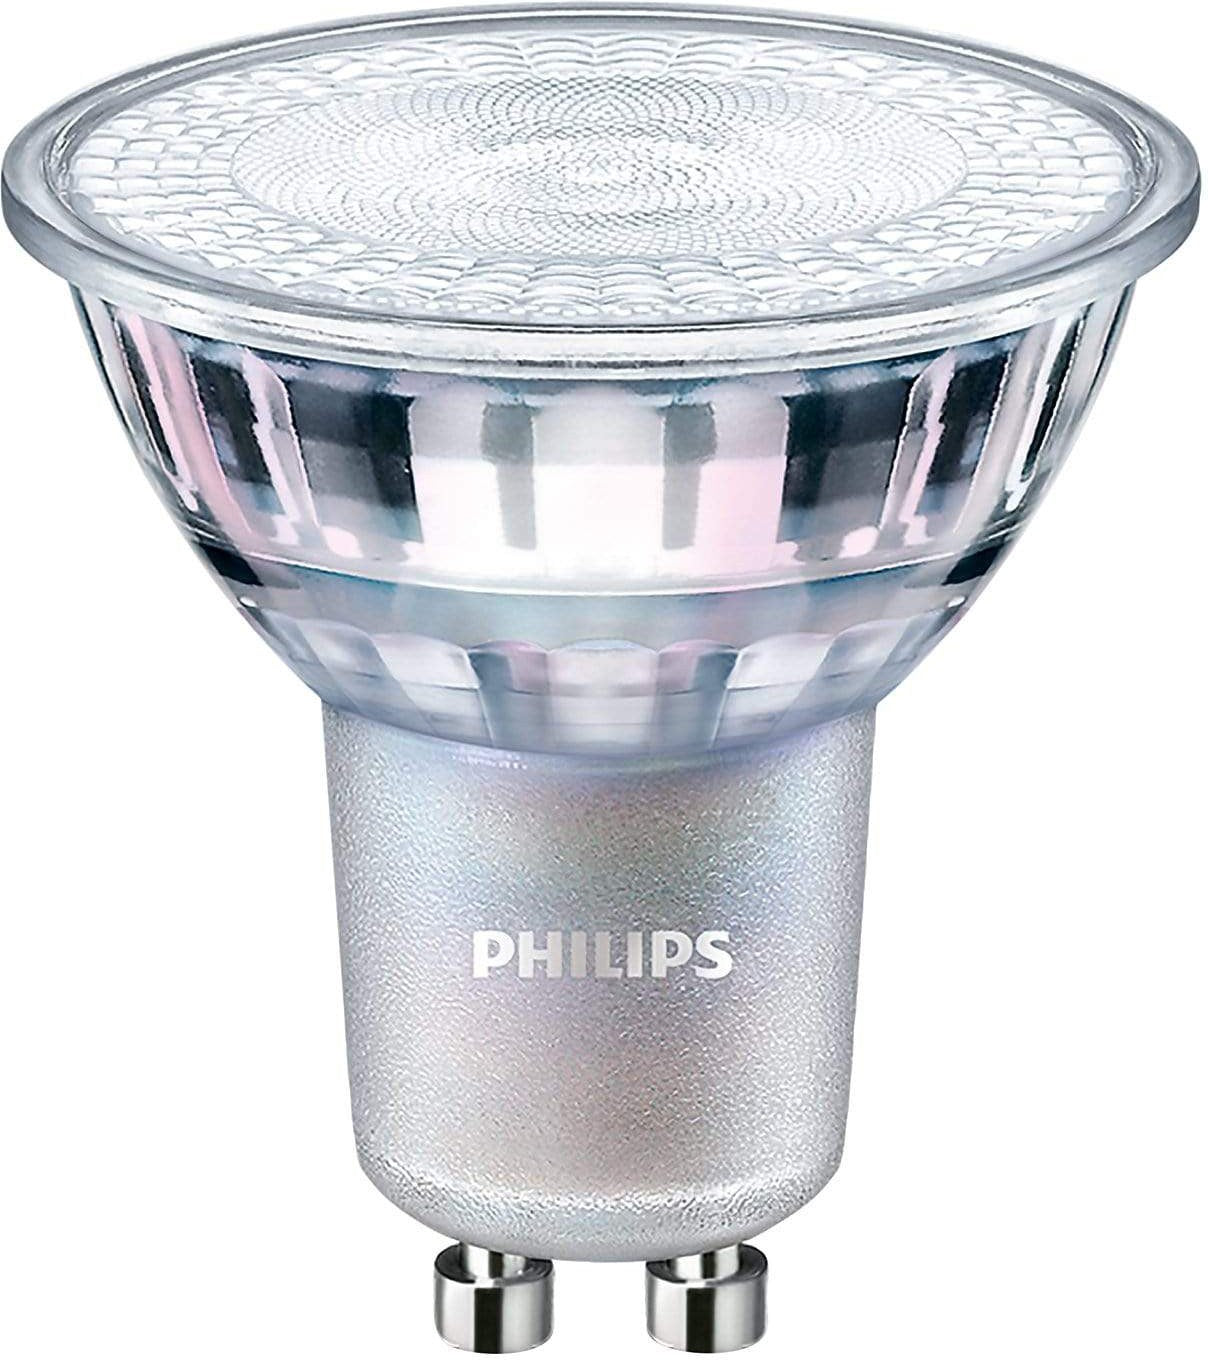 PHILIPS Master Dimtone GU10 x10PCs, Philips LED DownLight - DELIGHT OptoElectronics Pte. Ltd